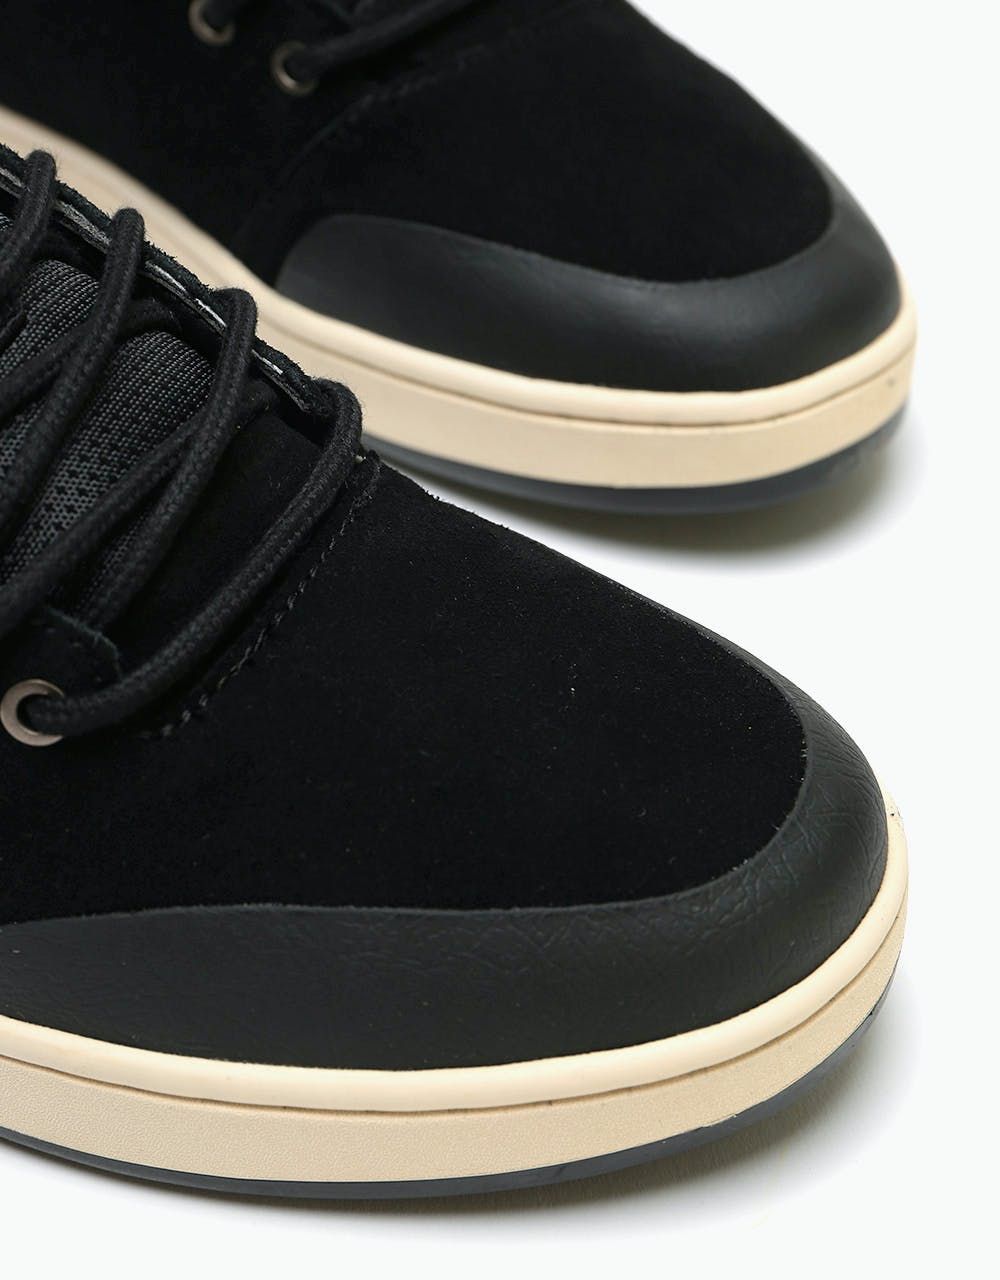 Etnies Marana MTW Skate Shoes - Black/Navy